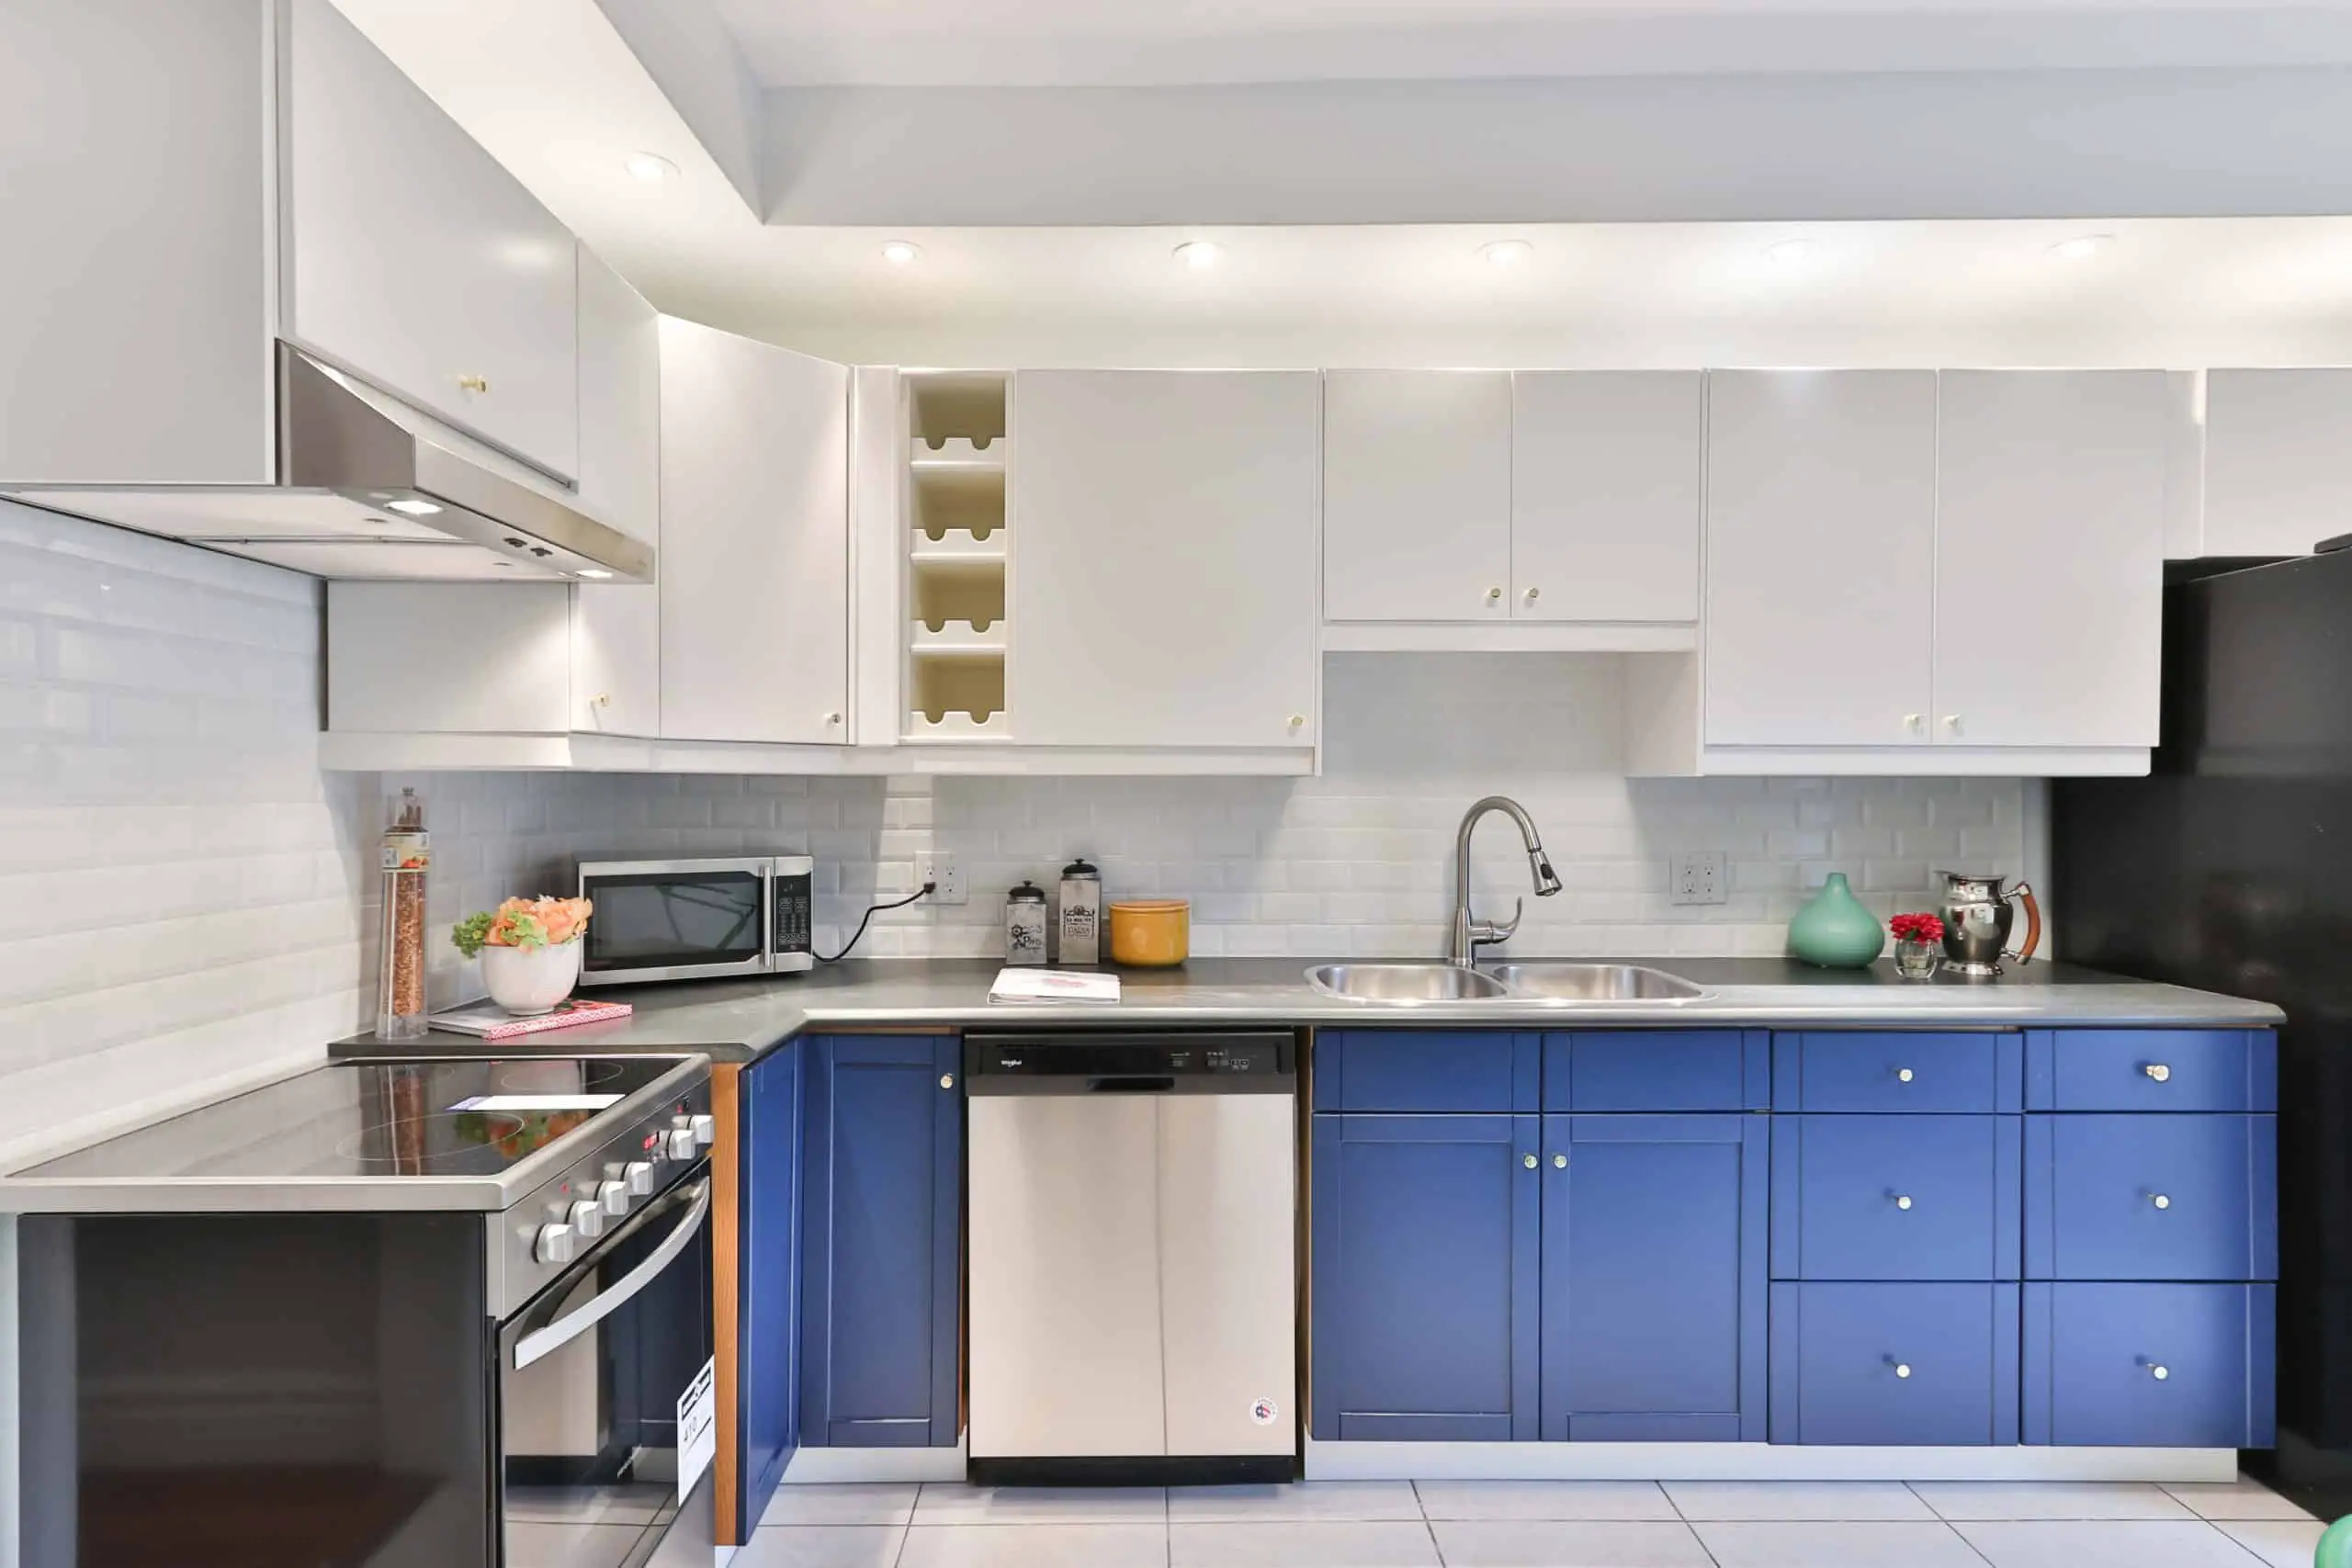 Cornflower blue kitchen cabinet color ideas